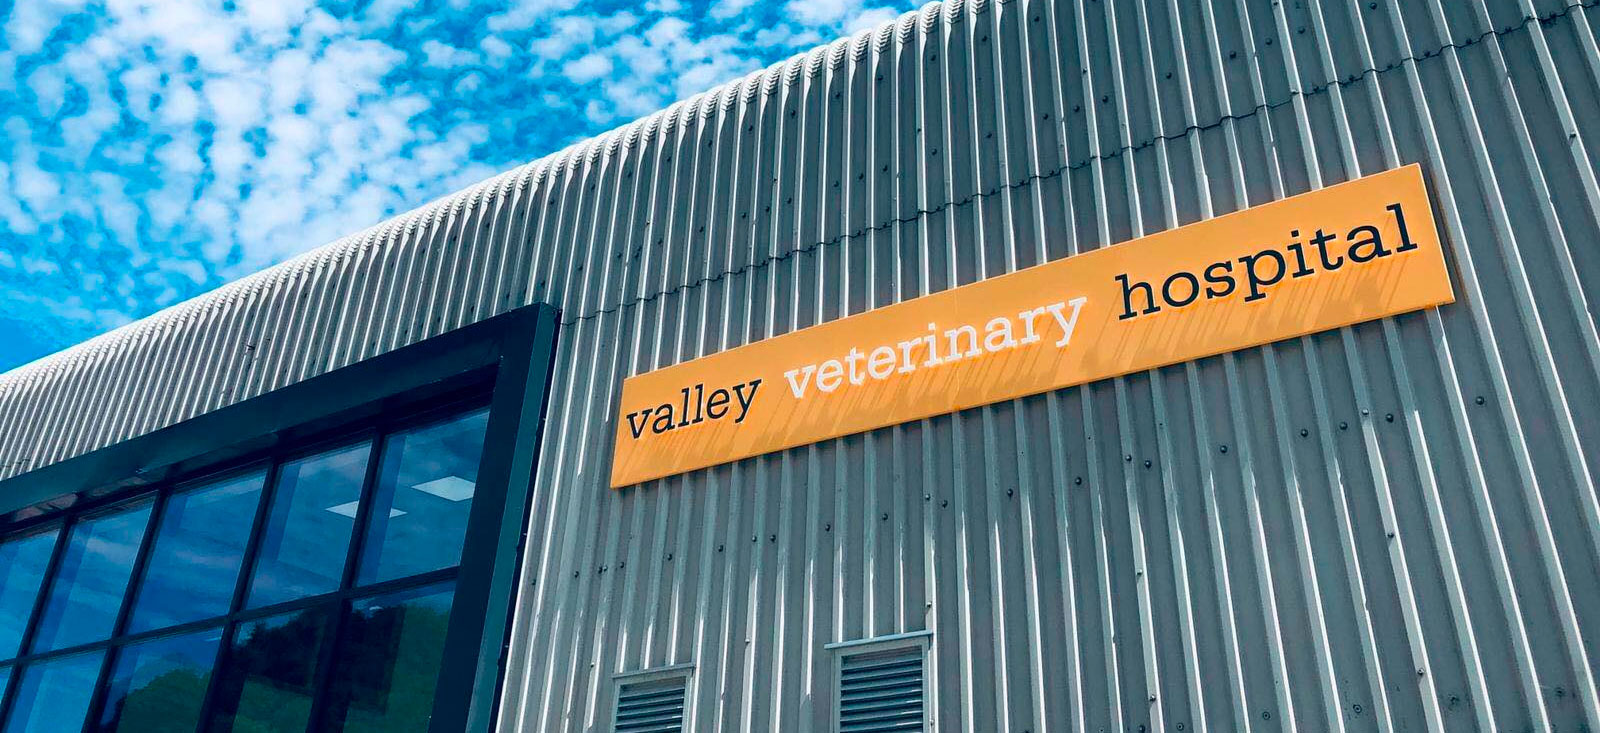 Valley 24/7 Care Valley Vets Ltd